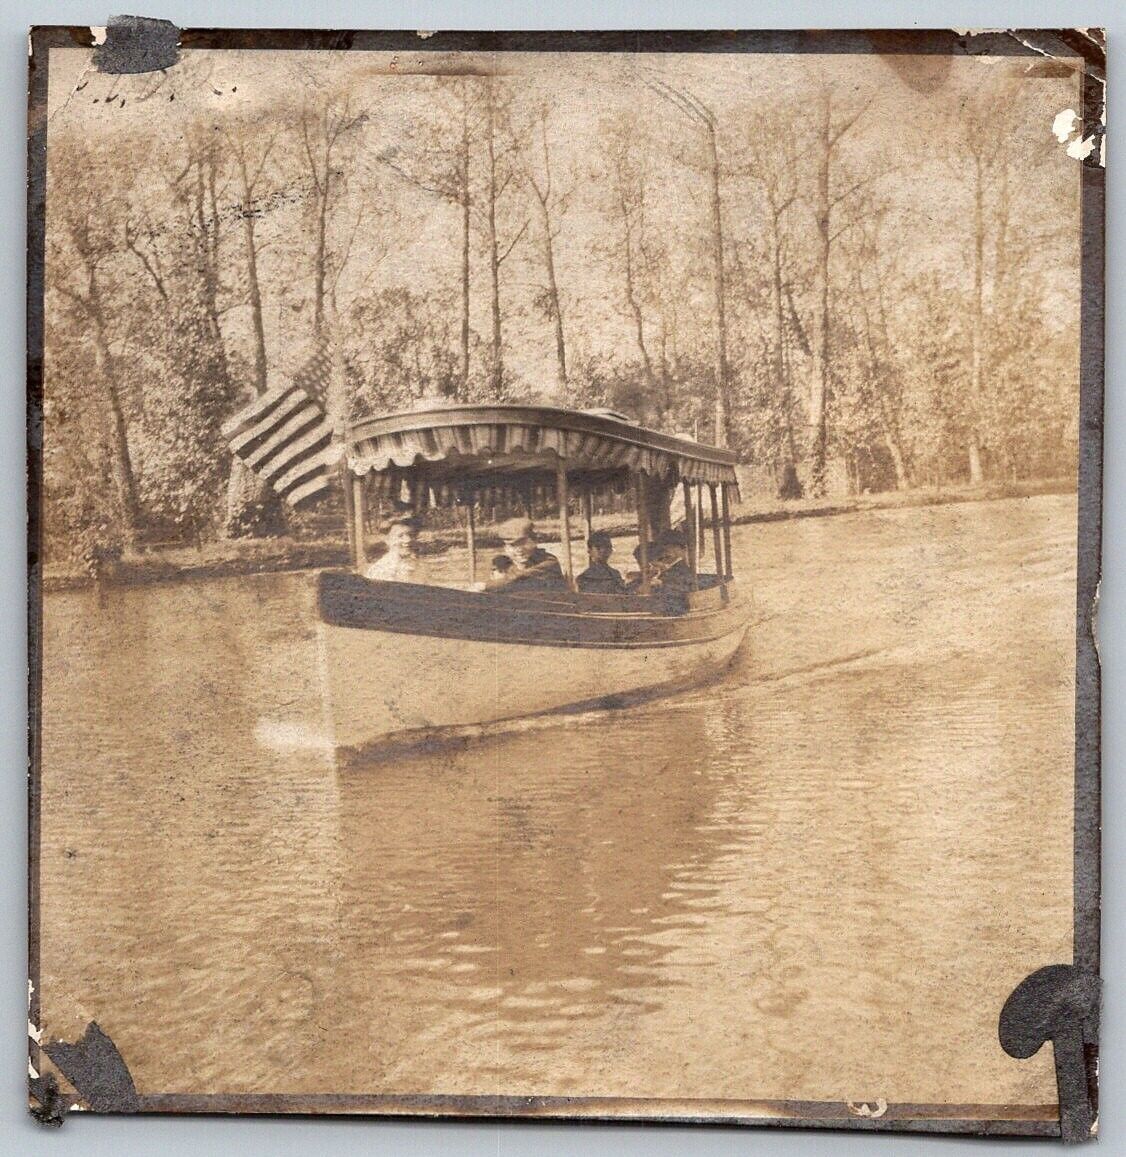 c1900 BOAT Original Antique Photograph Pleasure Boat Canopy Flag On River